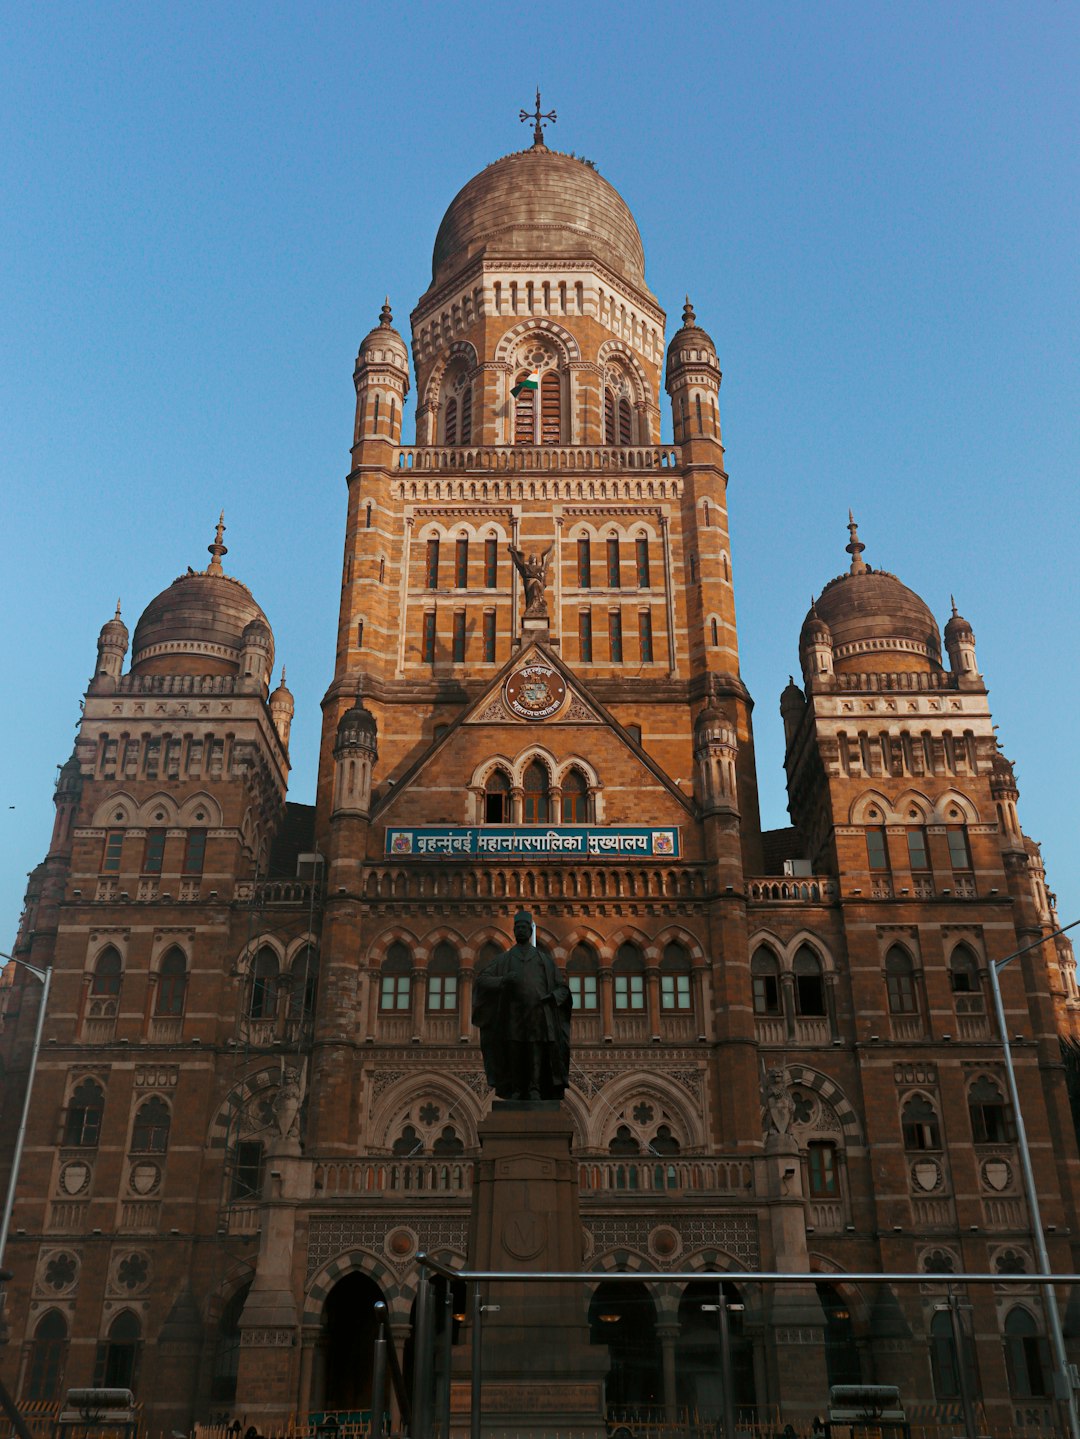 Travel Tips and Stories of Chhatrapati Shivaji Maharaj Terminus in India